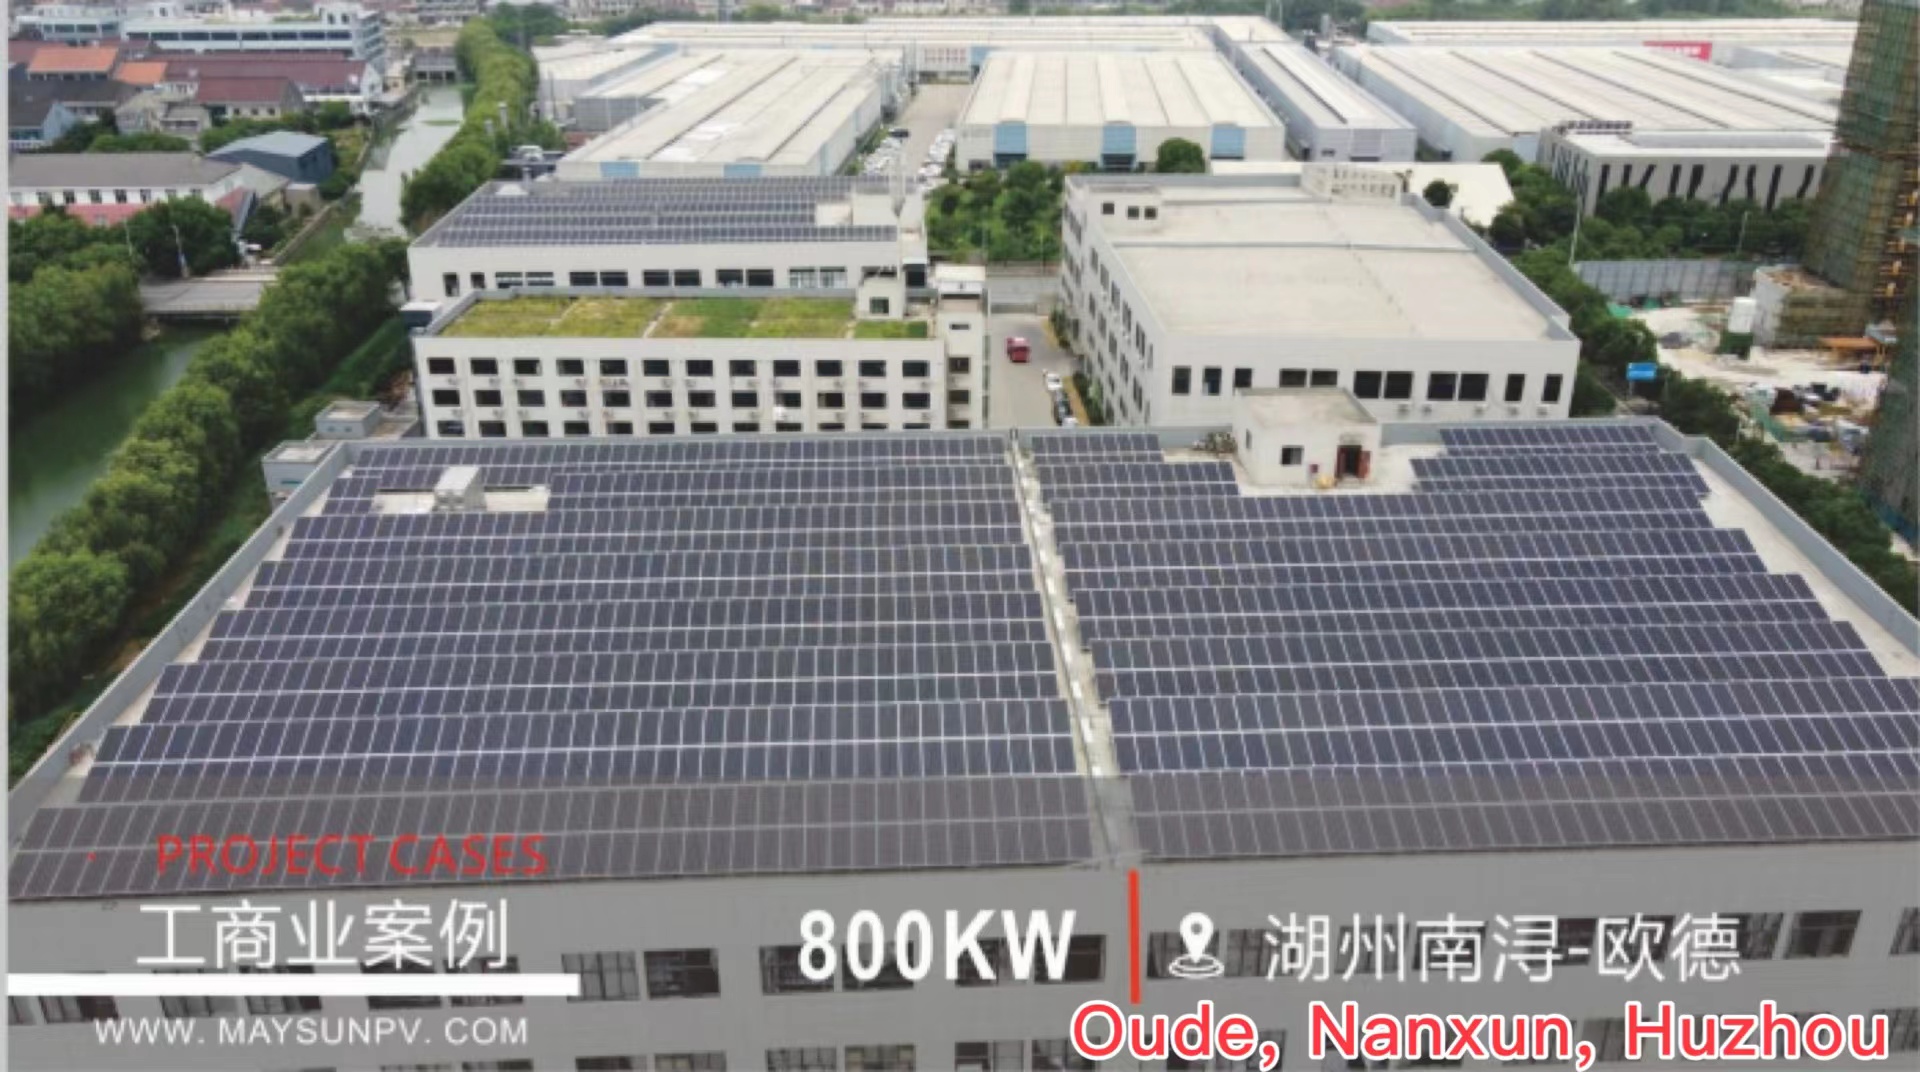 800KW Commercial solar pv project in Oude, Nanxun, Huzhou